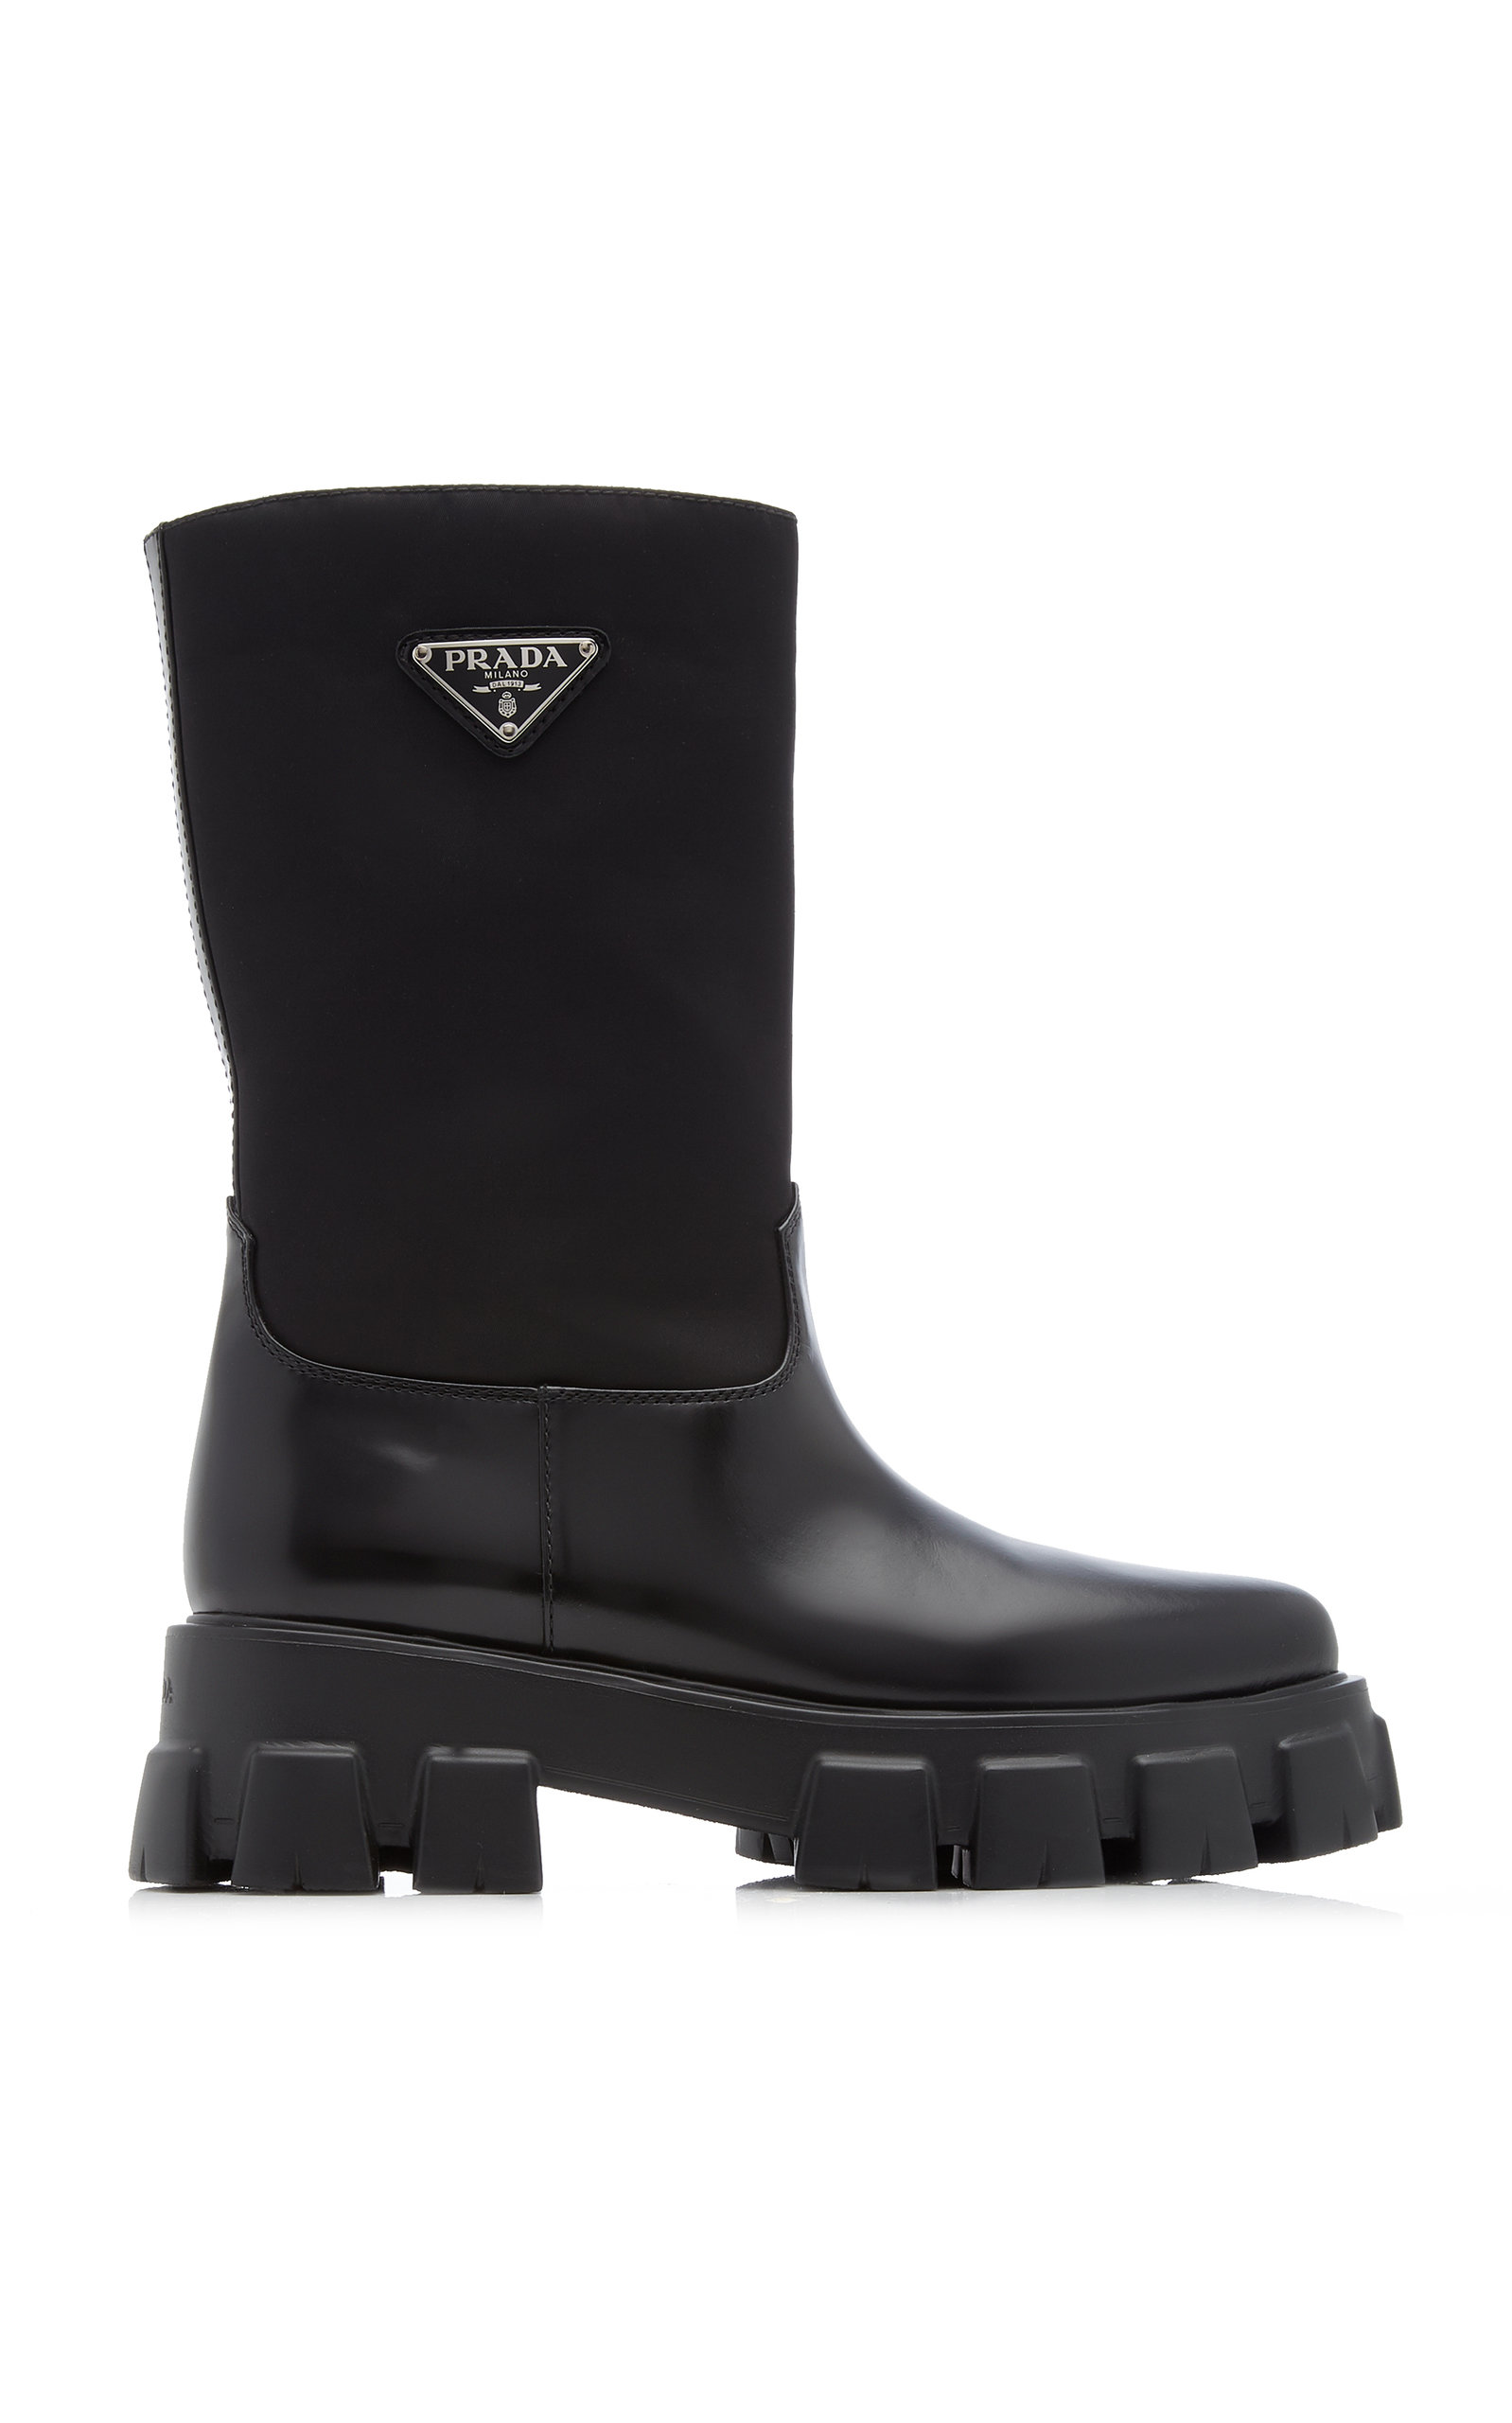 Prada - Leather Boots - Black - IT 39 - Moda Operandi